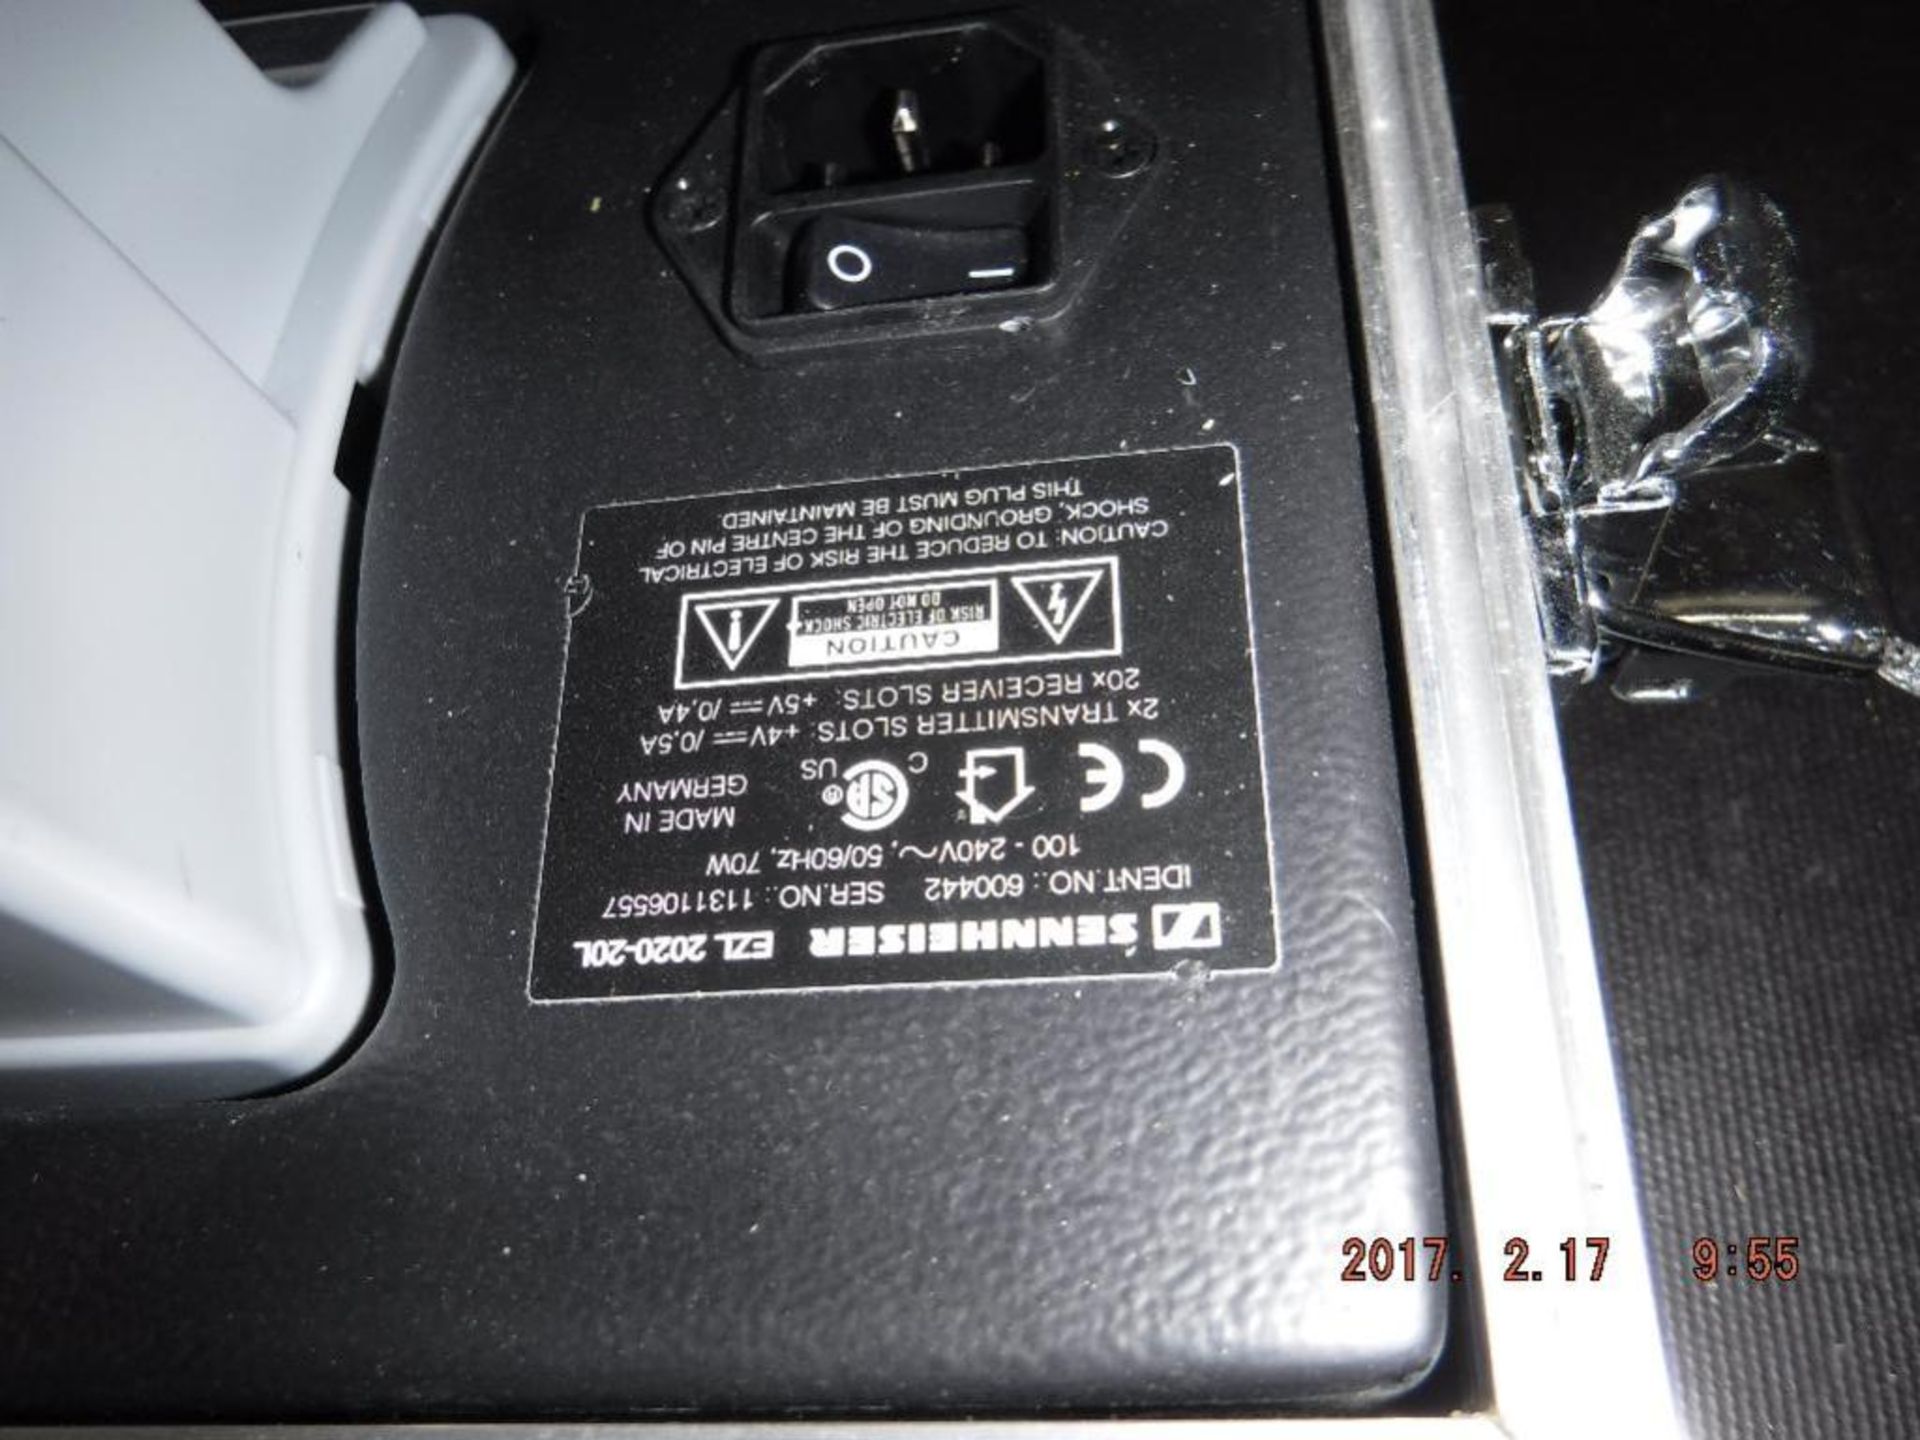 Sennheiser EZL 2020-20L Tap Guide Sound System, 20 Head Sets, 1-Mic, S/N 1131106557 - Image 3 of 3